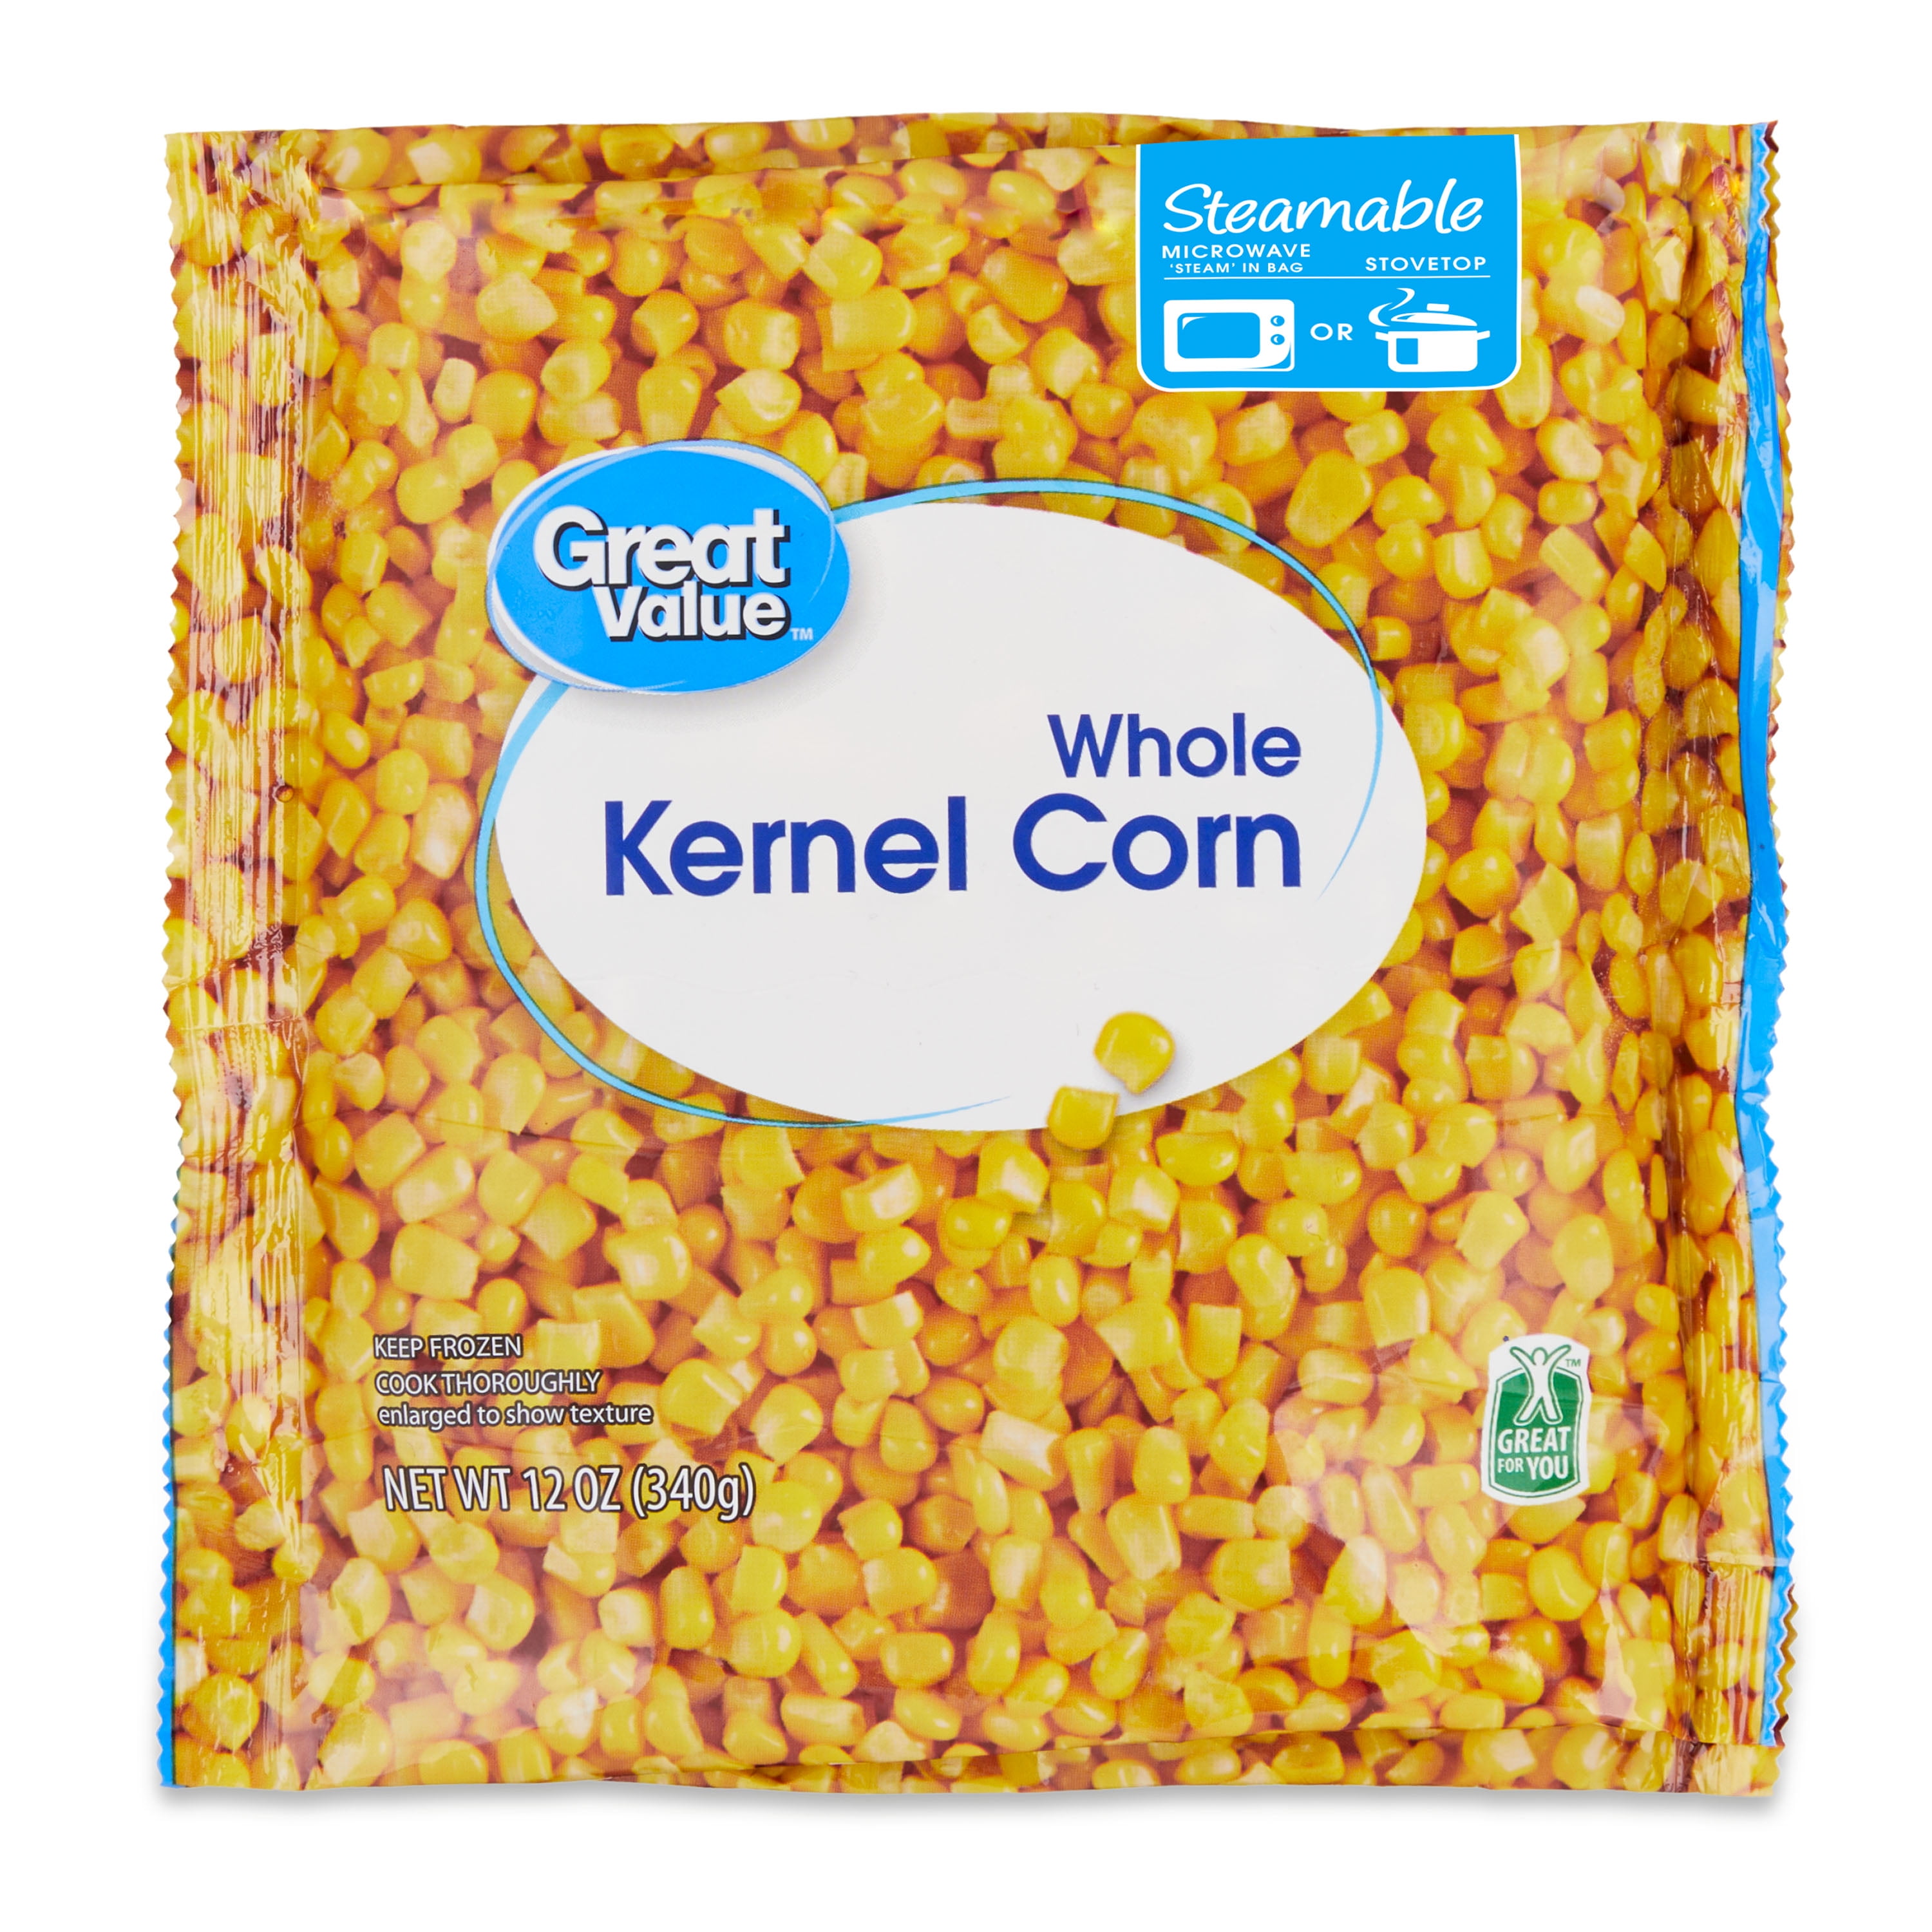 Great Value Steamable Whole Kernel Corn, 12 oz (Frozen)